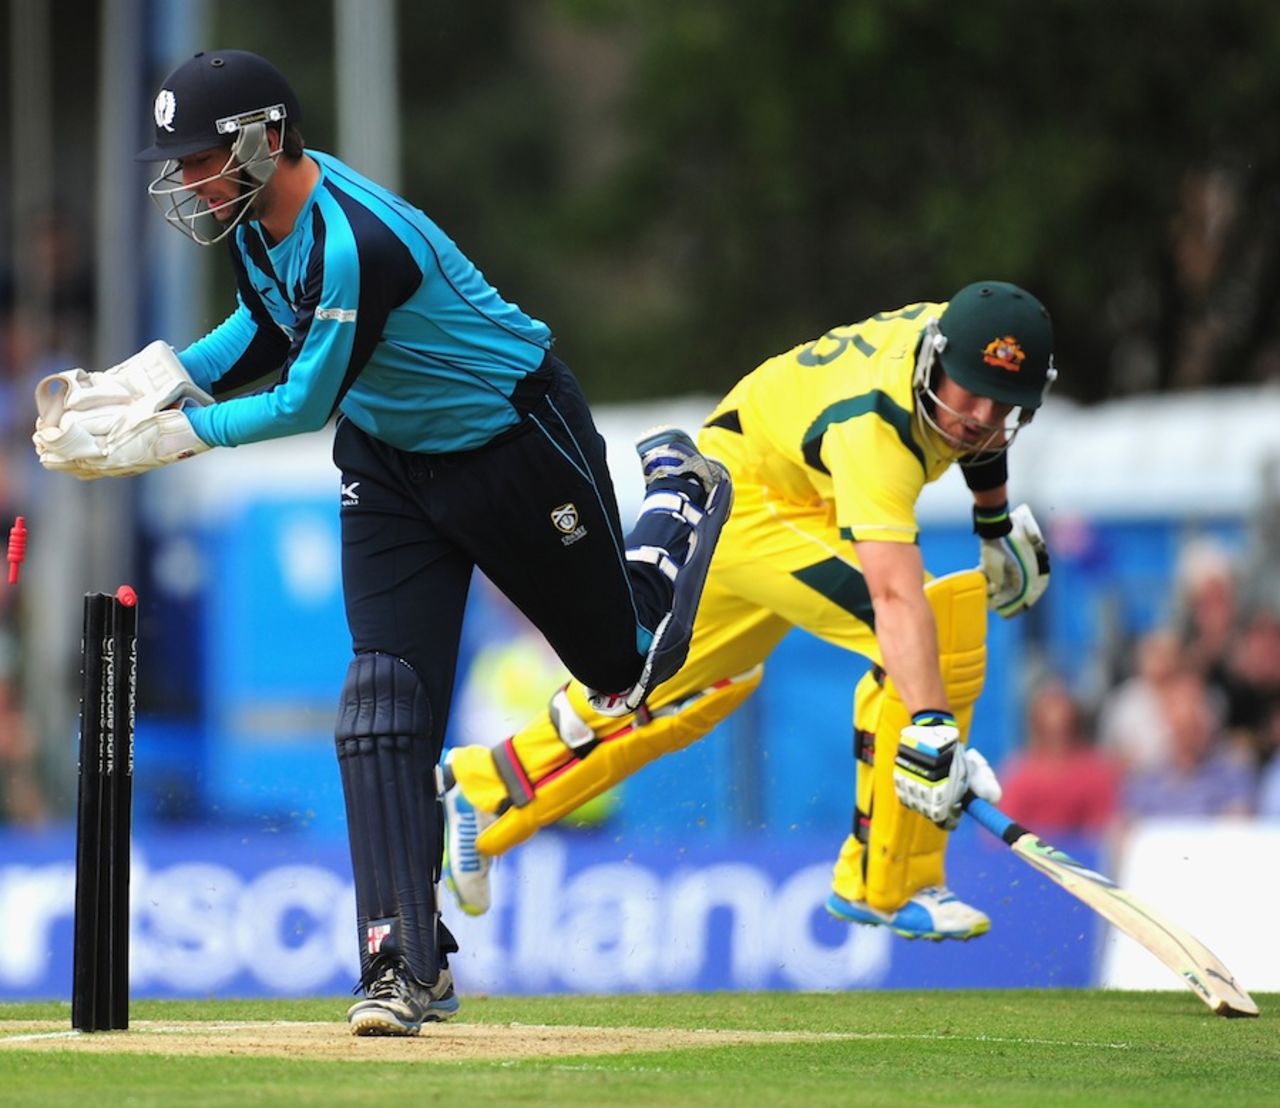 David Murphy flicks the bails off as Aaron Finch runs in, Scotland v Australia, only ODI, Edinburgh, September 3, 2013